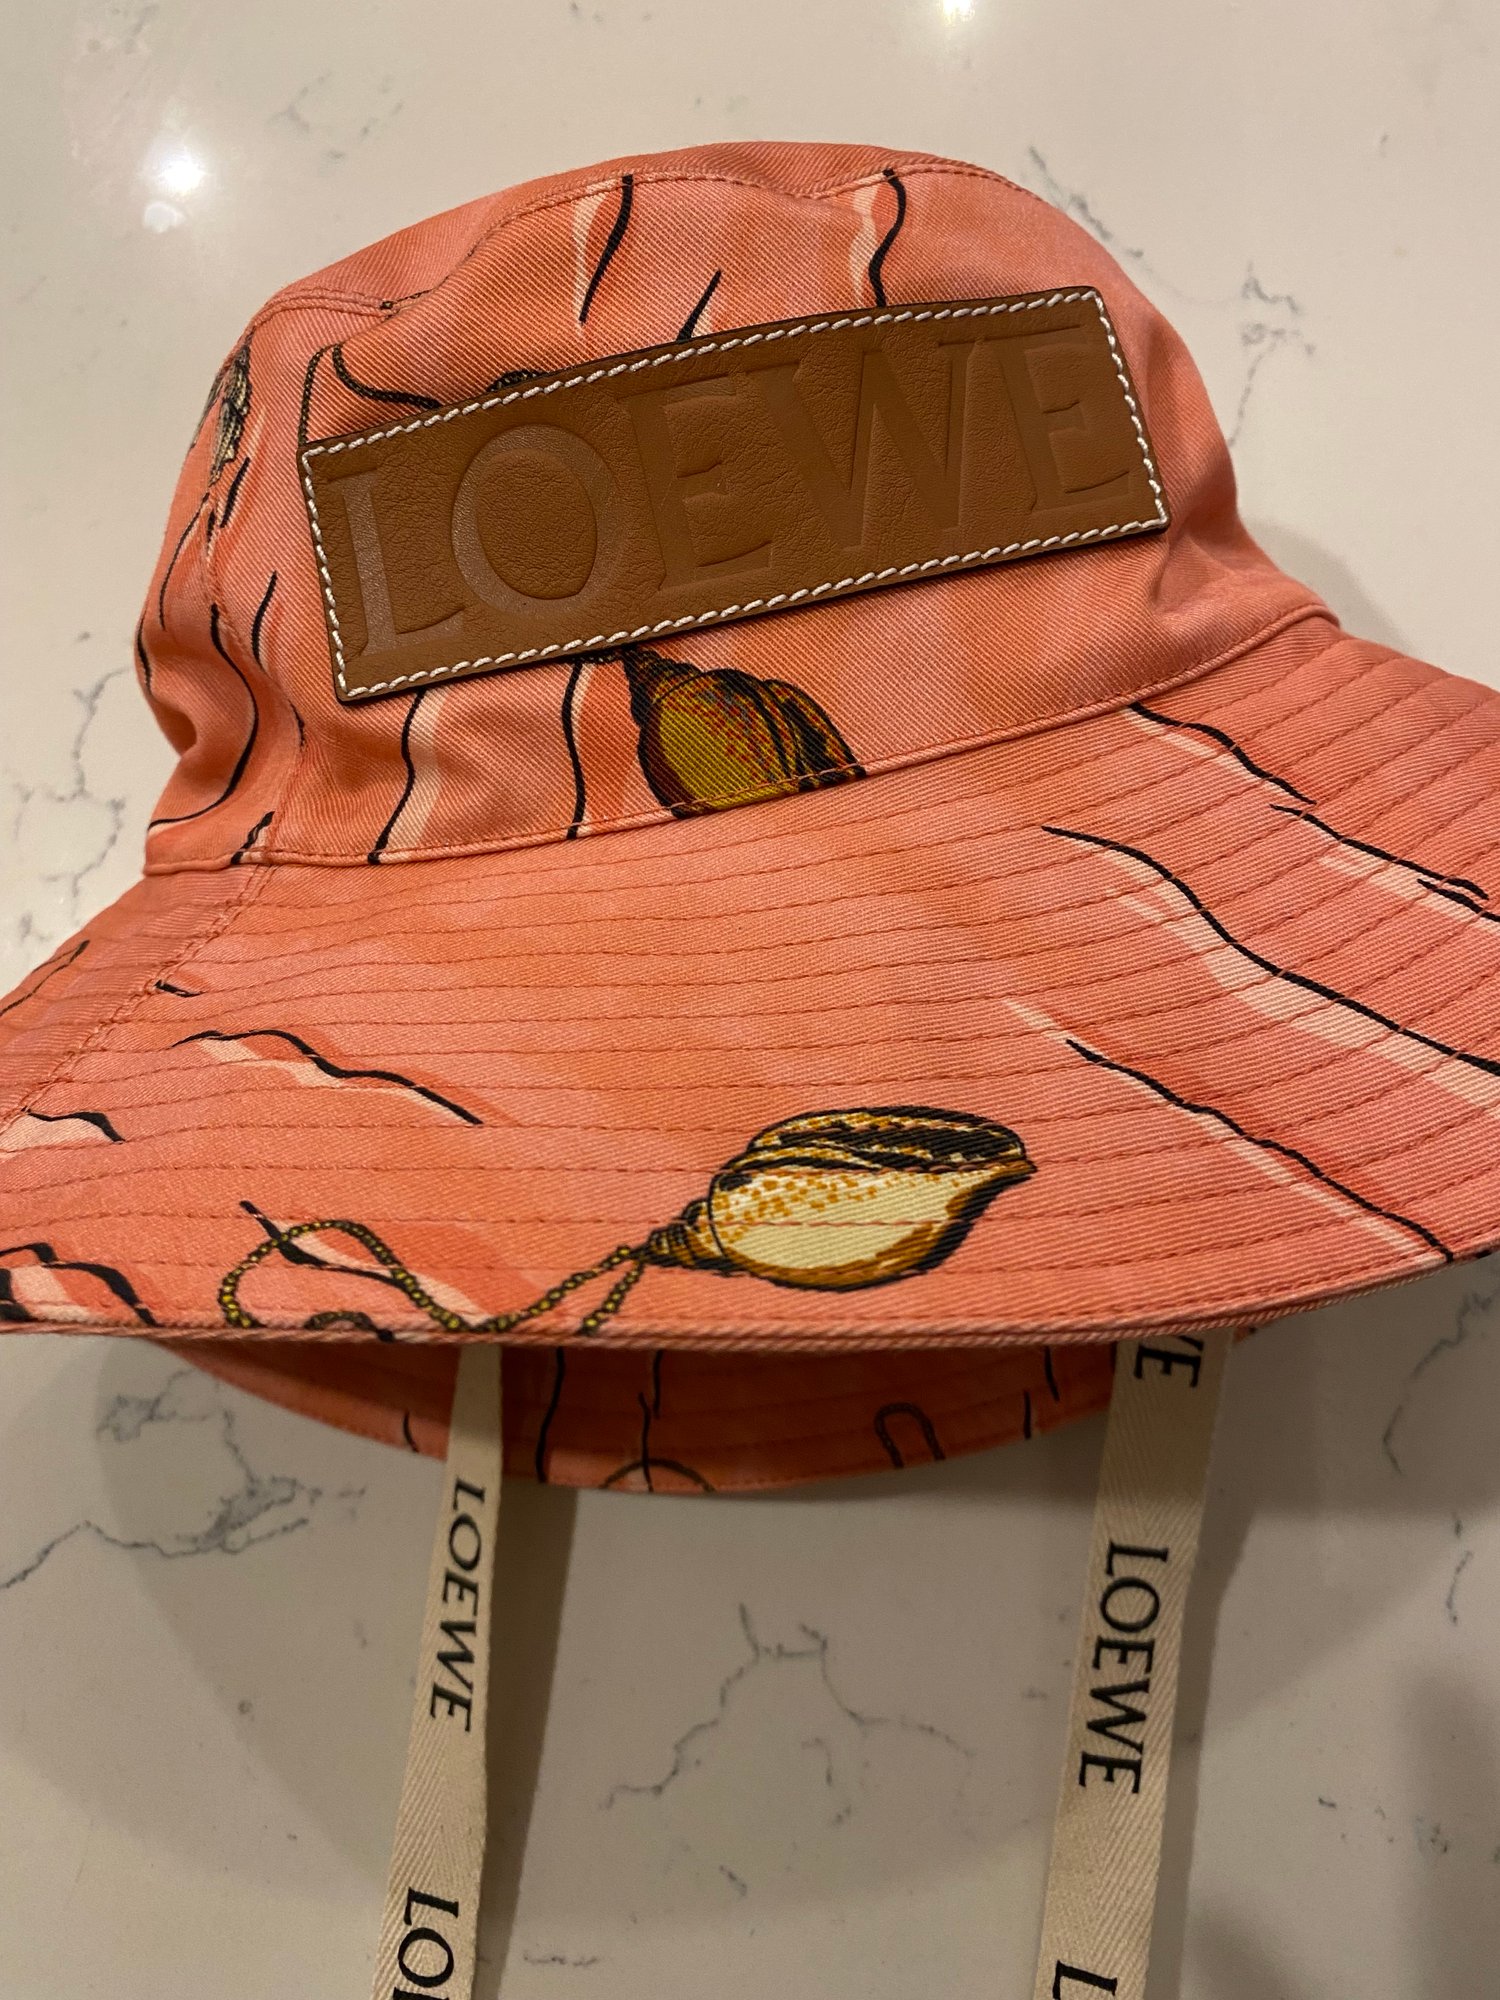 LOEWE Calfskin Leather Fisherman Hat